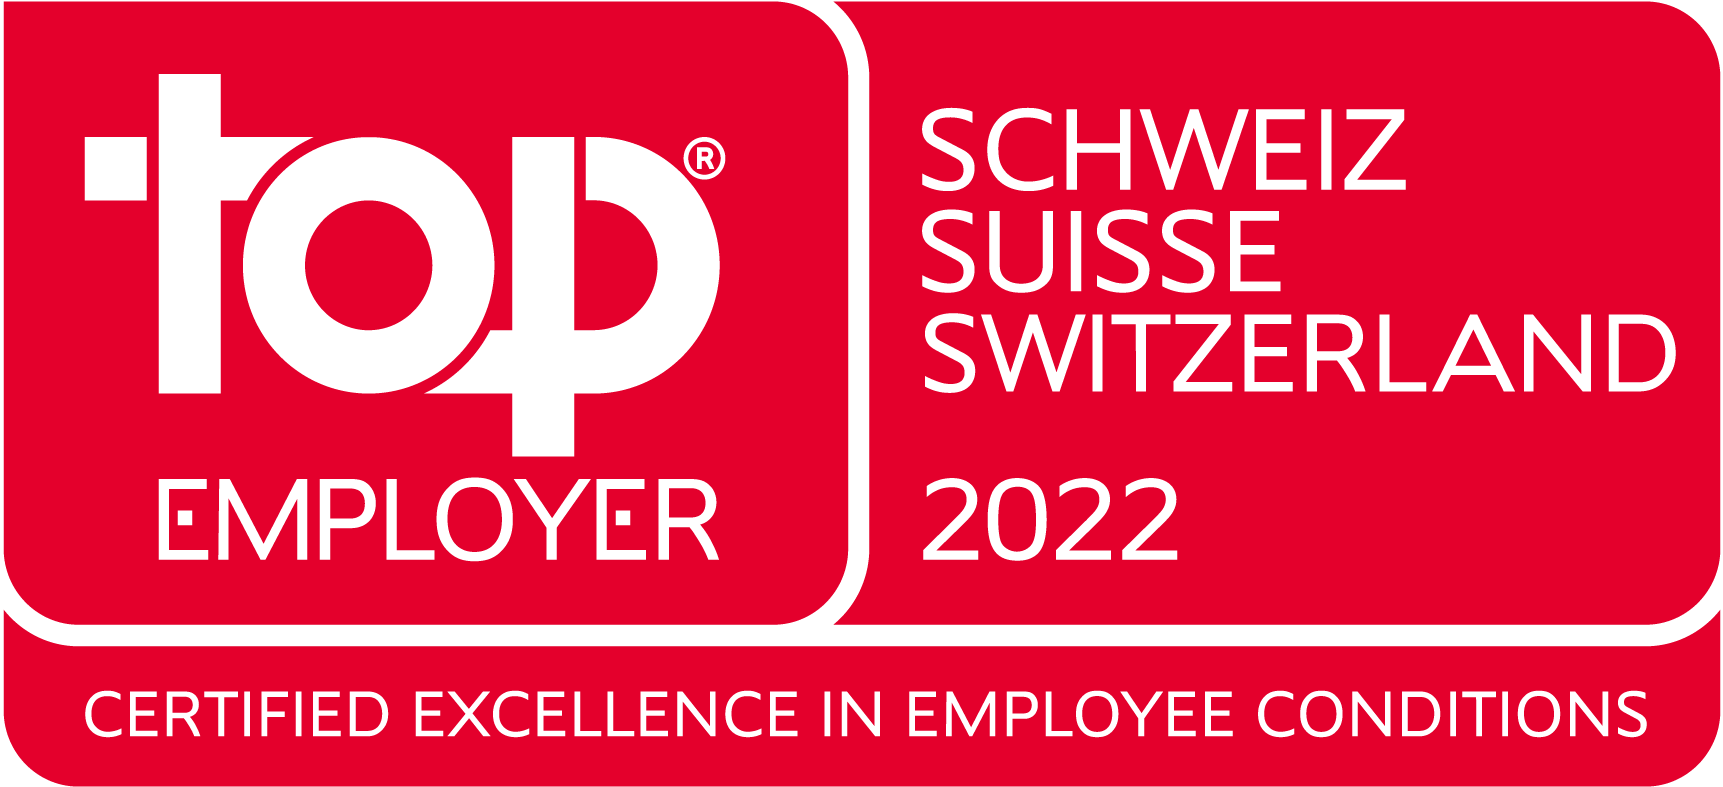 Switzerland Top Employer 2022 logo